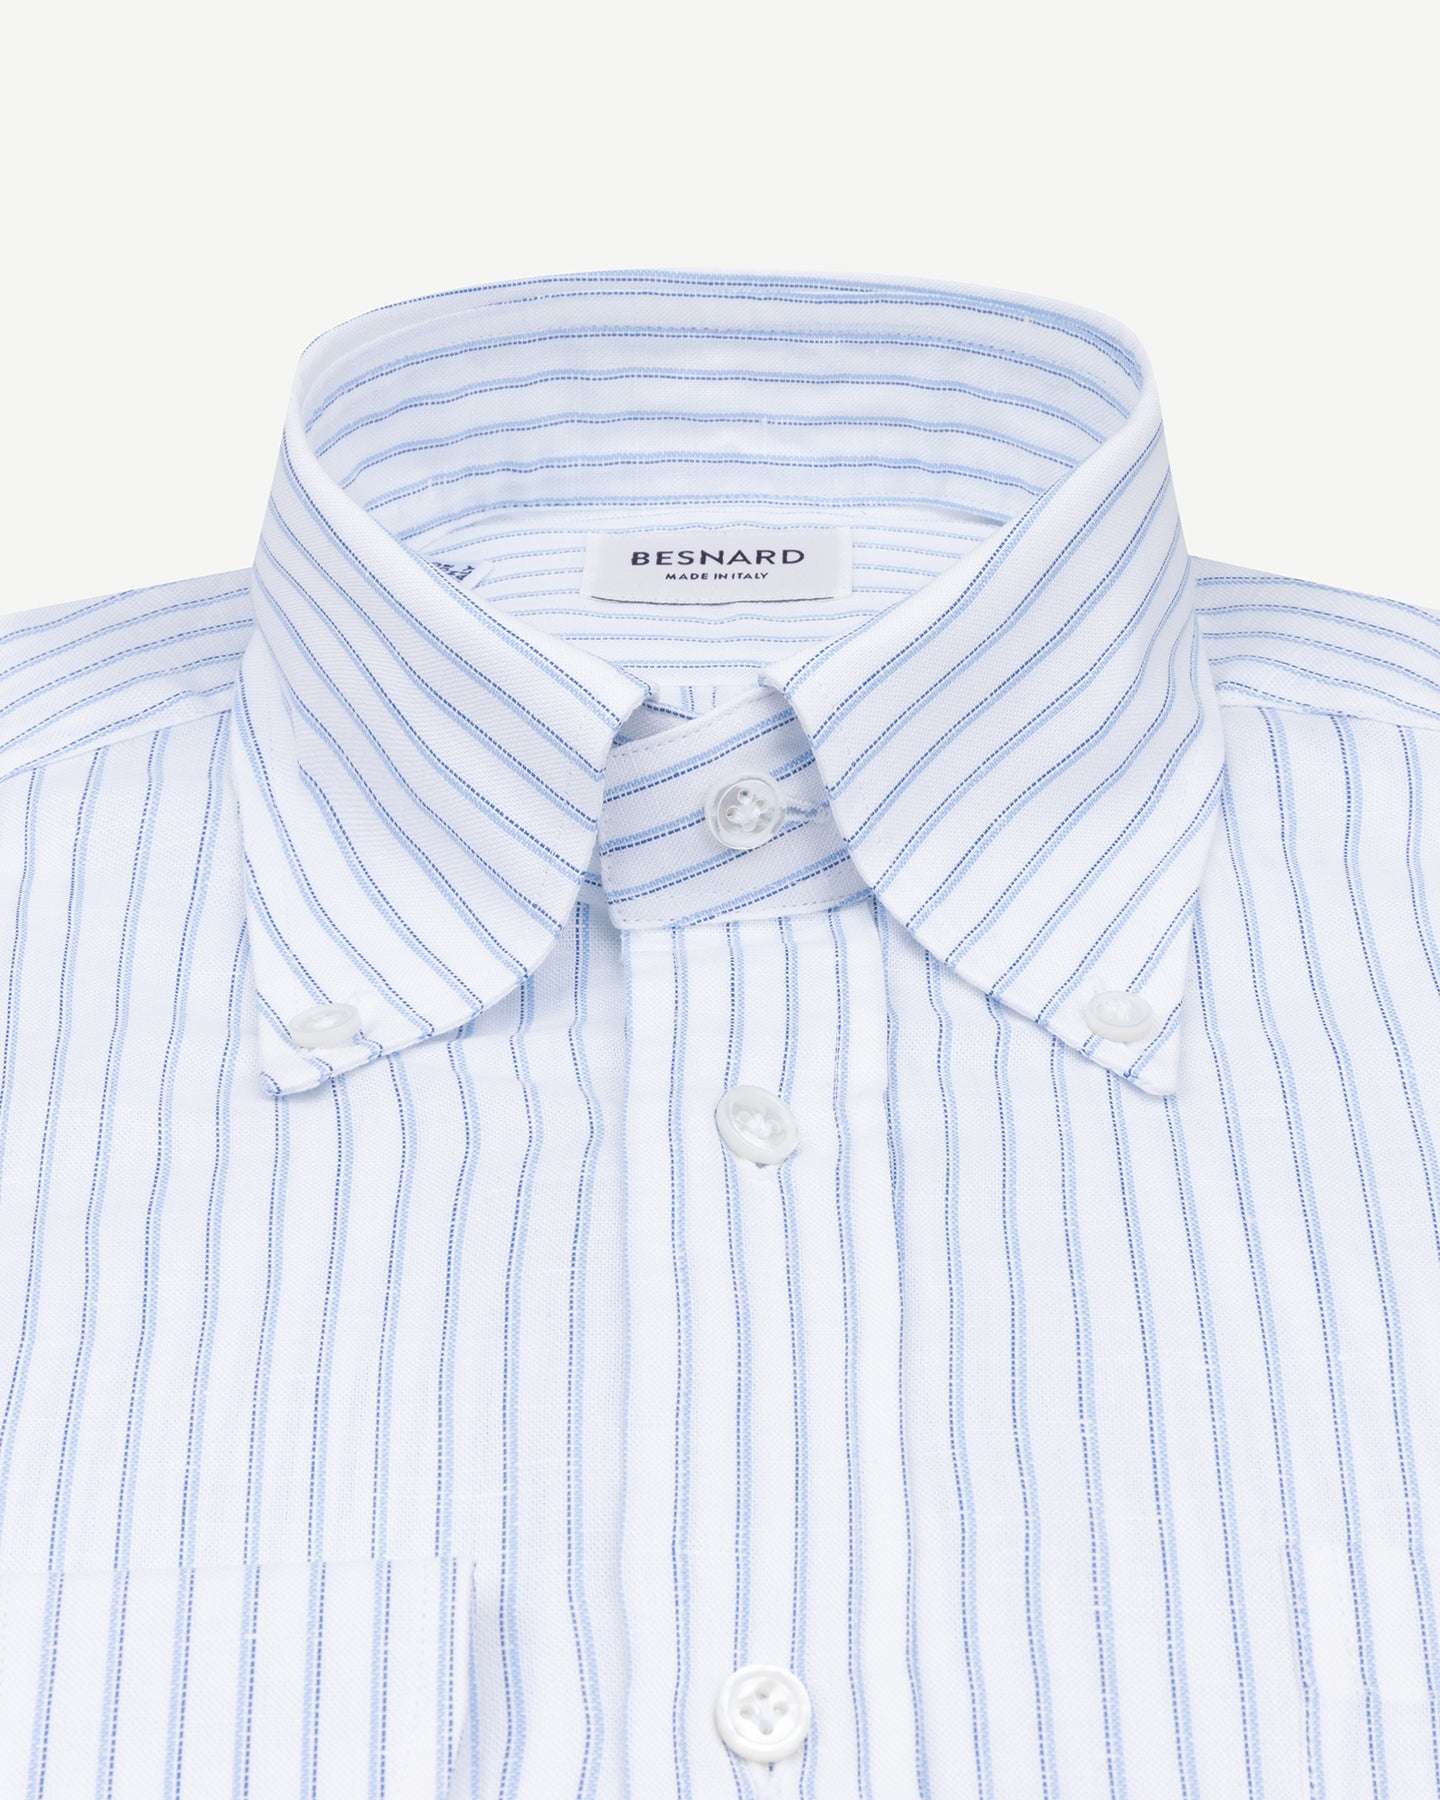 Light blue shadow stripe cotton linen shirt with button down collar